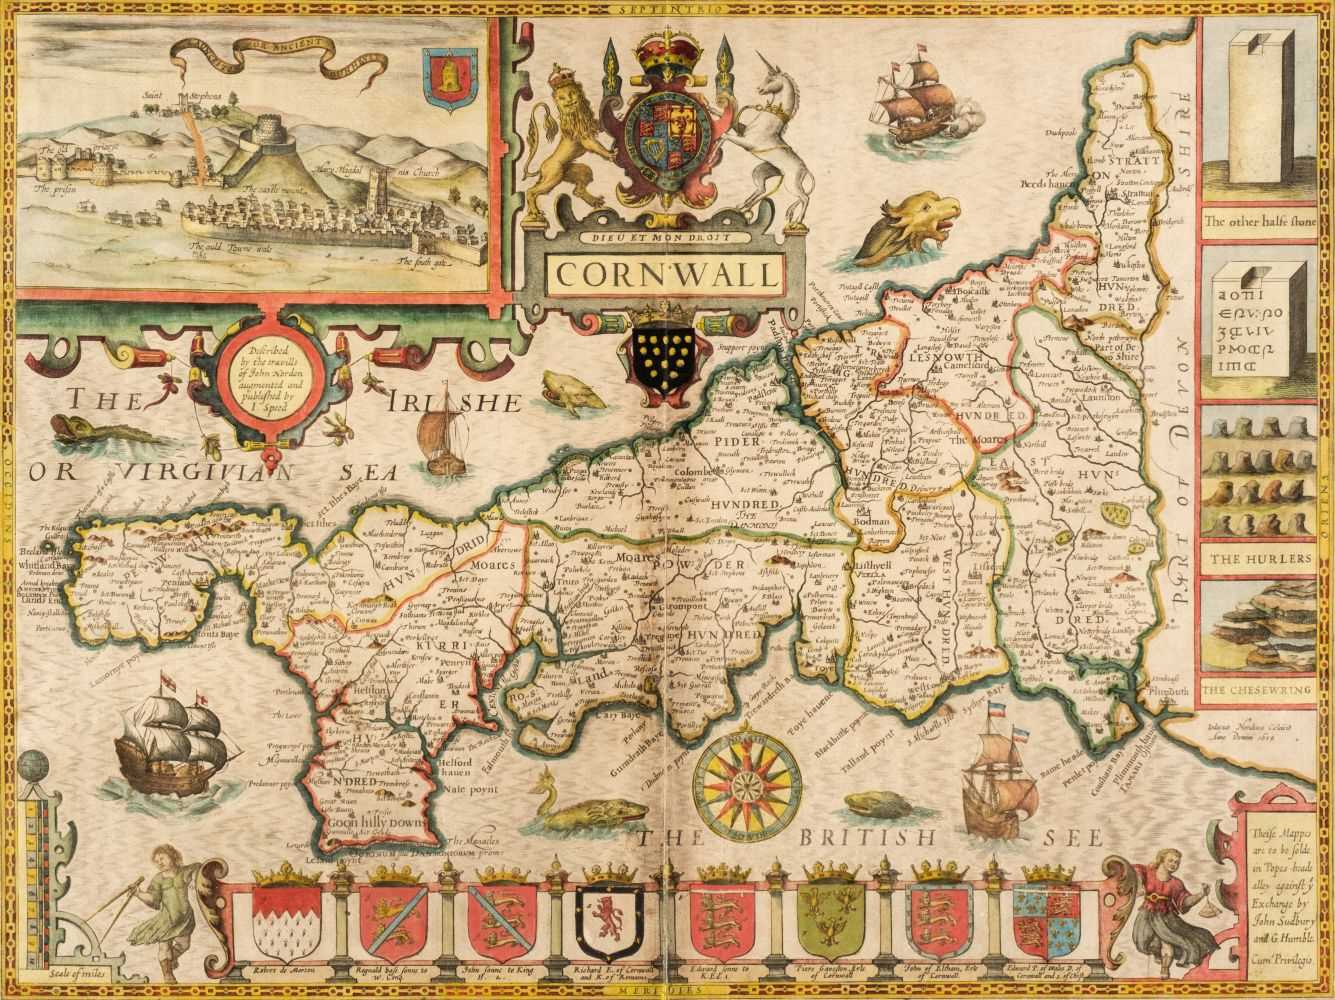 Lot 113 - Cornwall. Speed (John), Cornwall, J. Sudbury & G. Humble, circa 1627